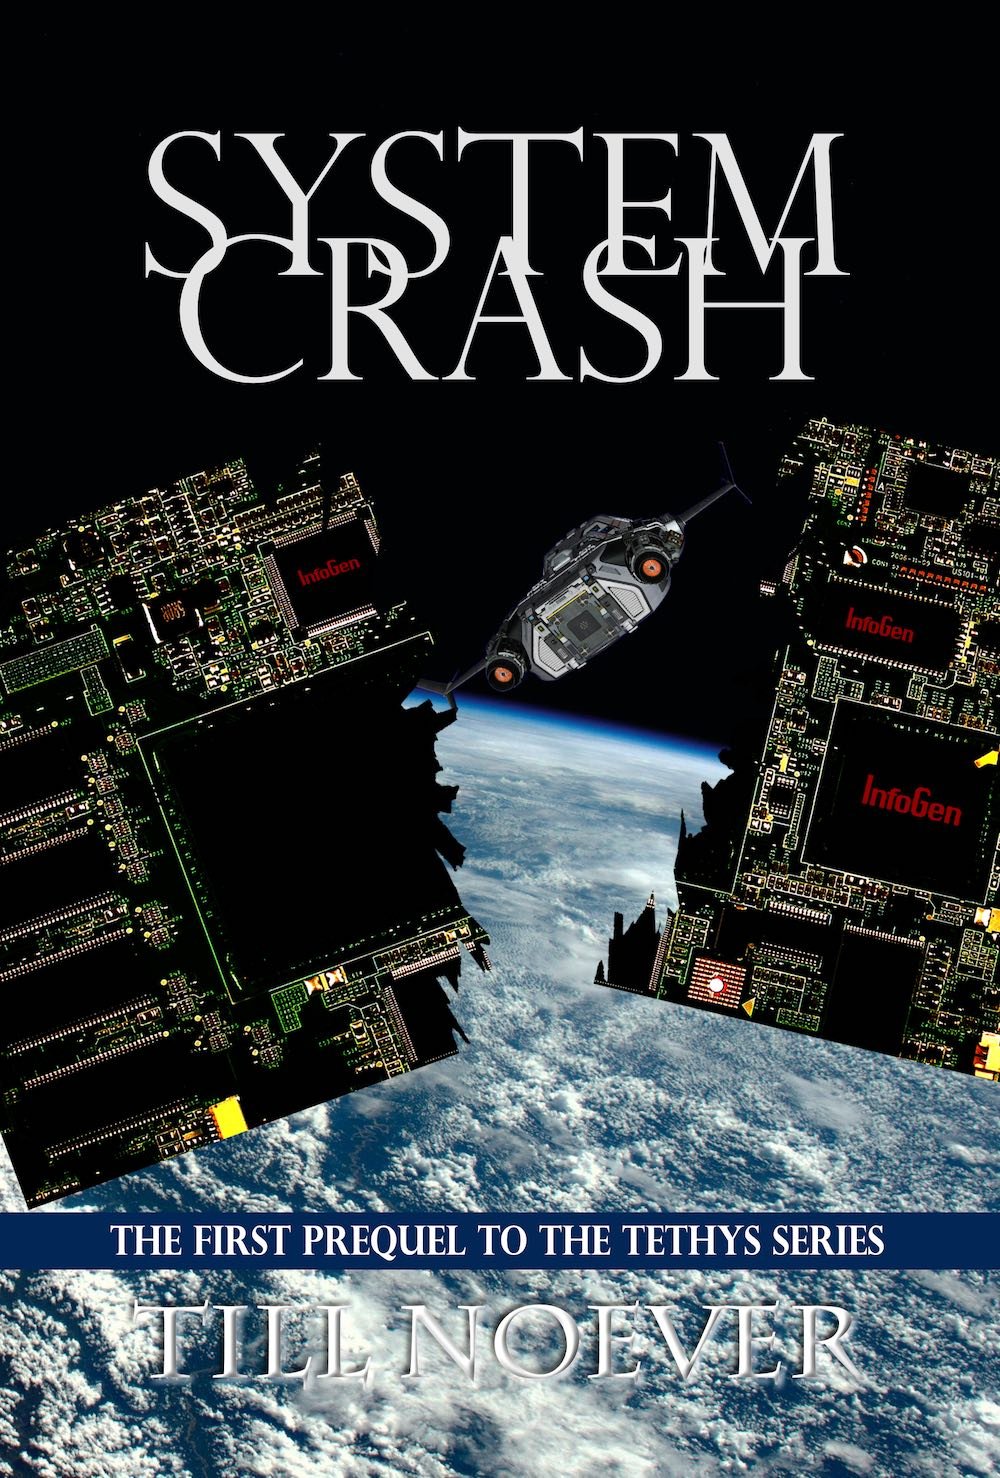 SYSTEM CRASH COVER KINDLE v3.1.3 MQ copy.jpeg